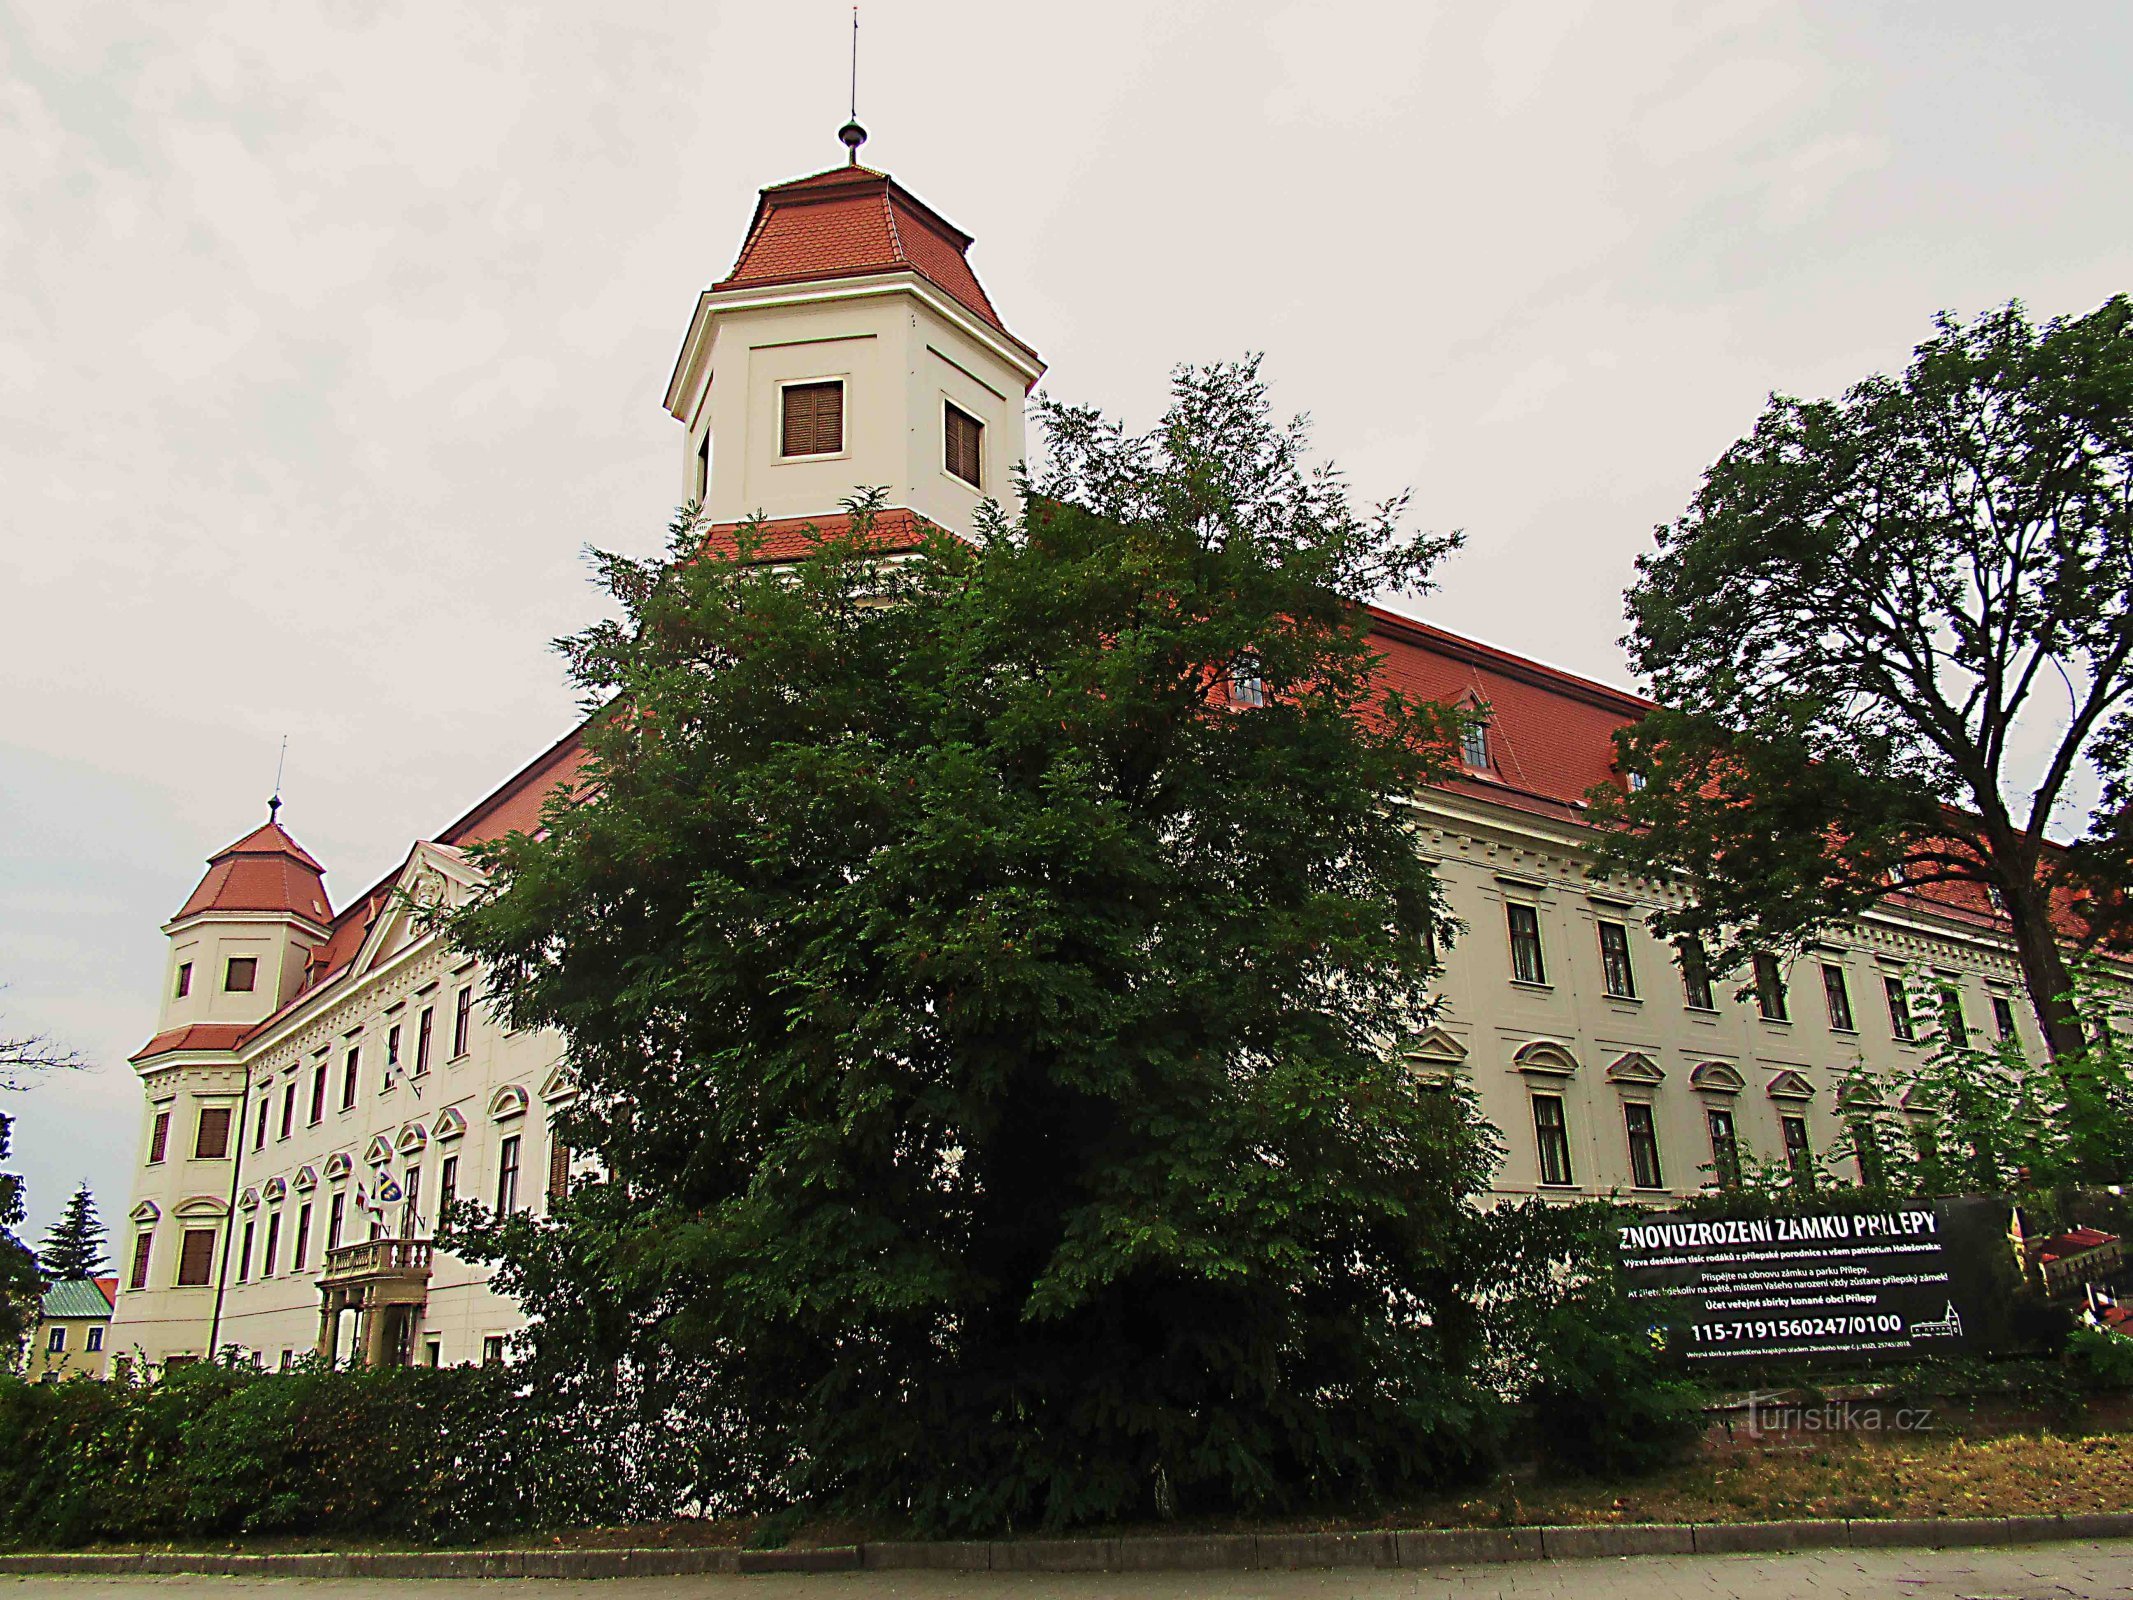 Ökozentrum - Hájenka Skřítek im Schlosspark Holešov